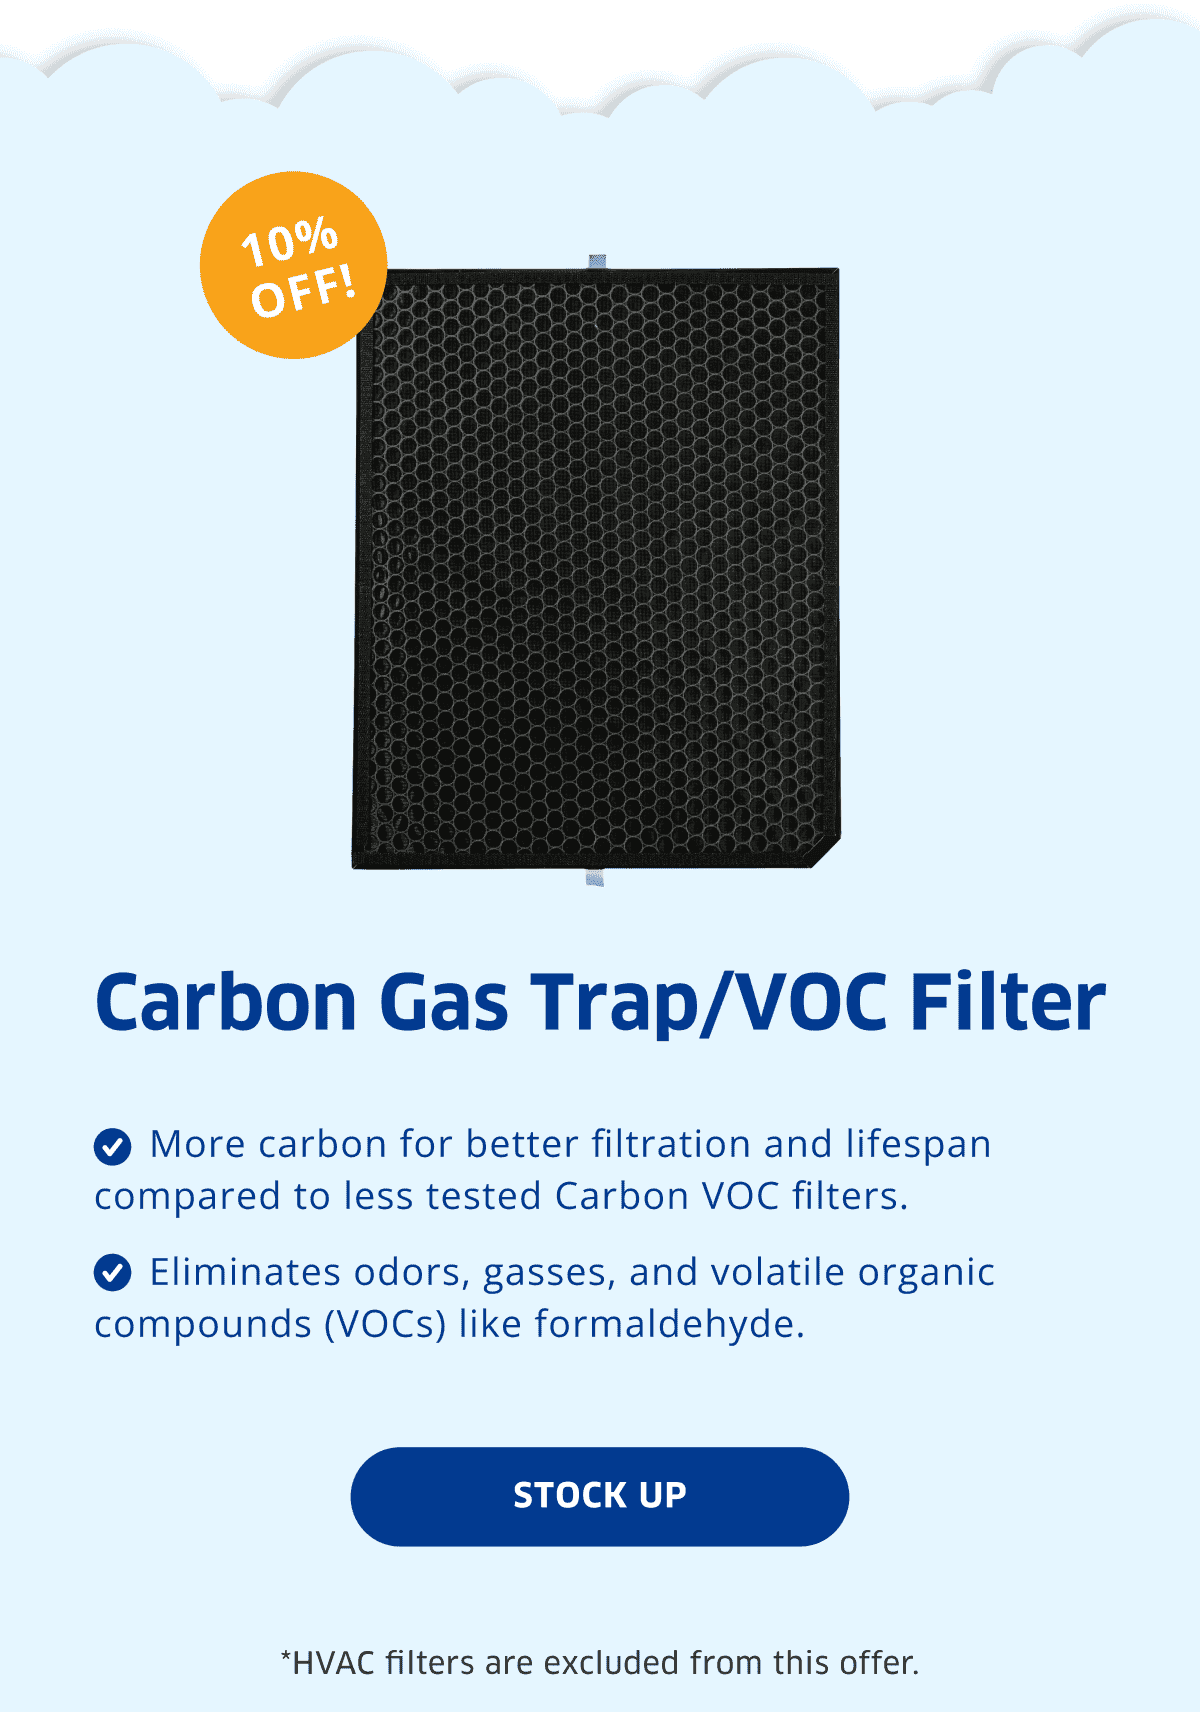 Carbon Gas Trap/VOC Filter | Stock Up